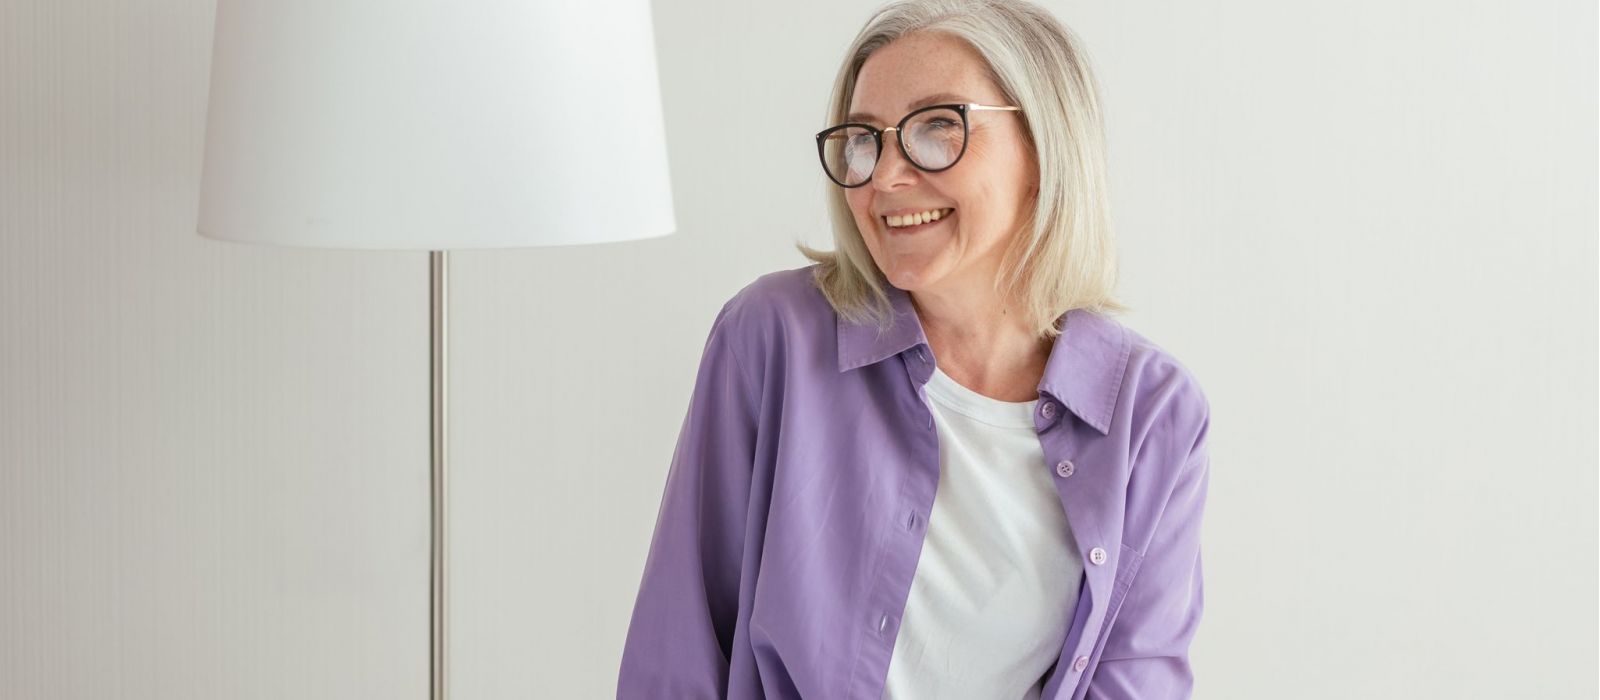 Smiling senior woman with glasses portrait.